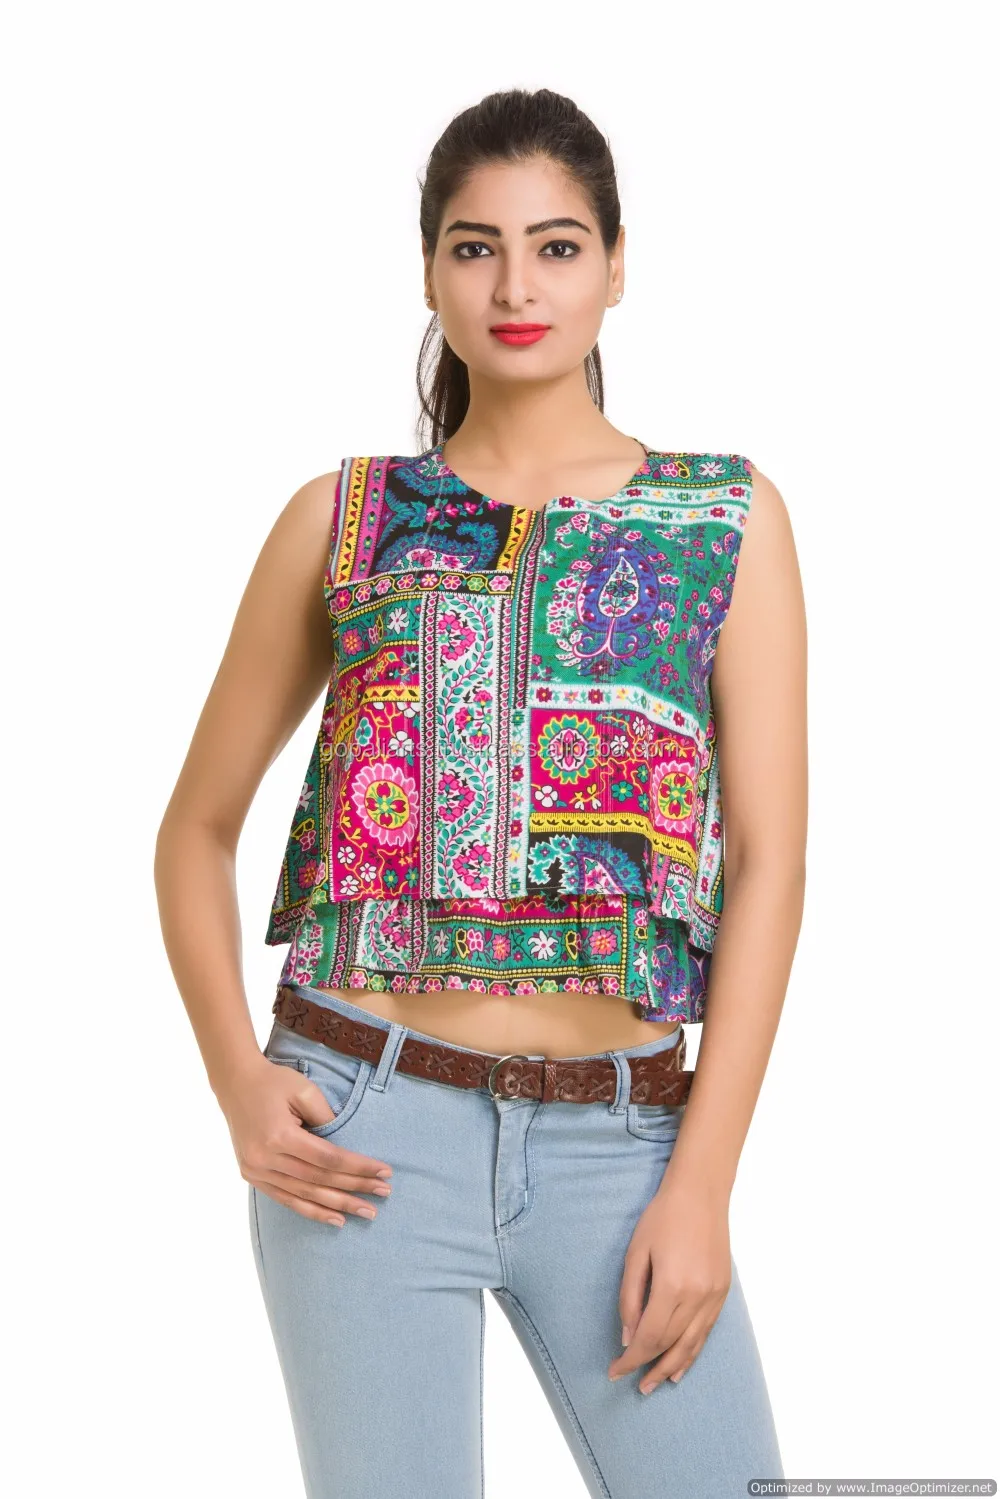 Indian Fashion Art Girls Crop Top Bohemian Sleevless Top Floral ...